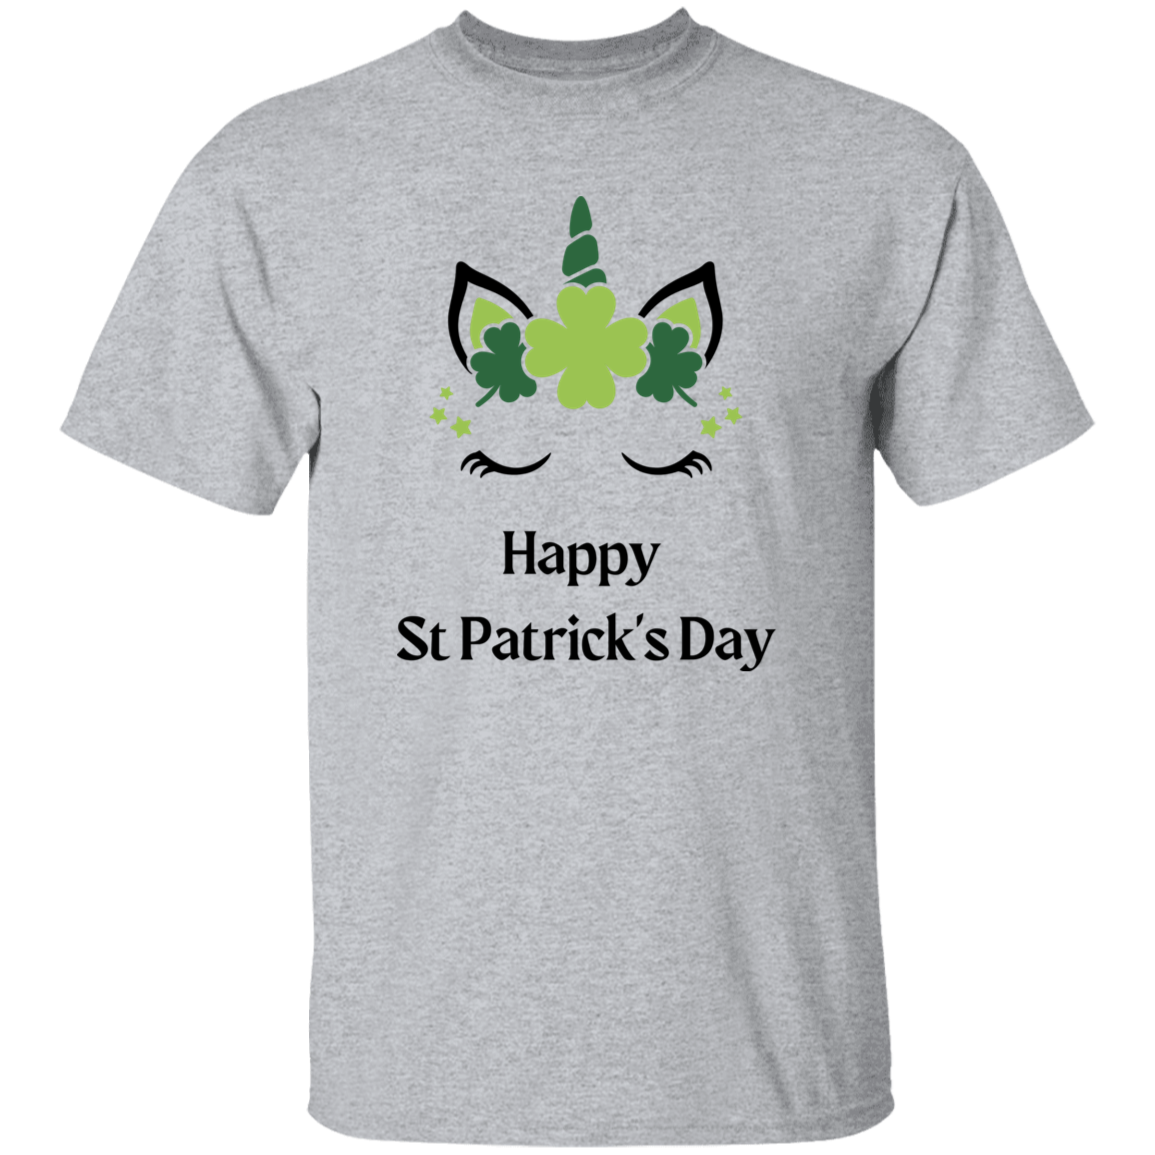 Youth Unicorn Happy St Patrick's Day T-Shirt